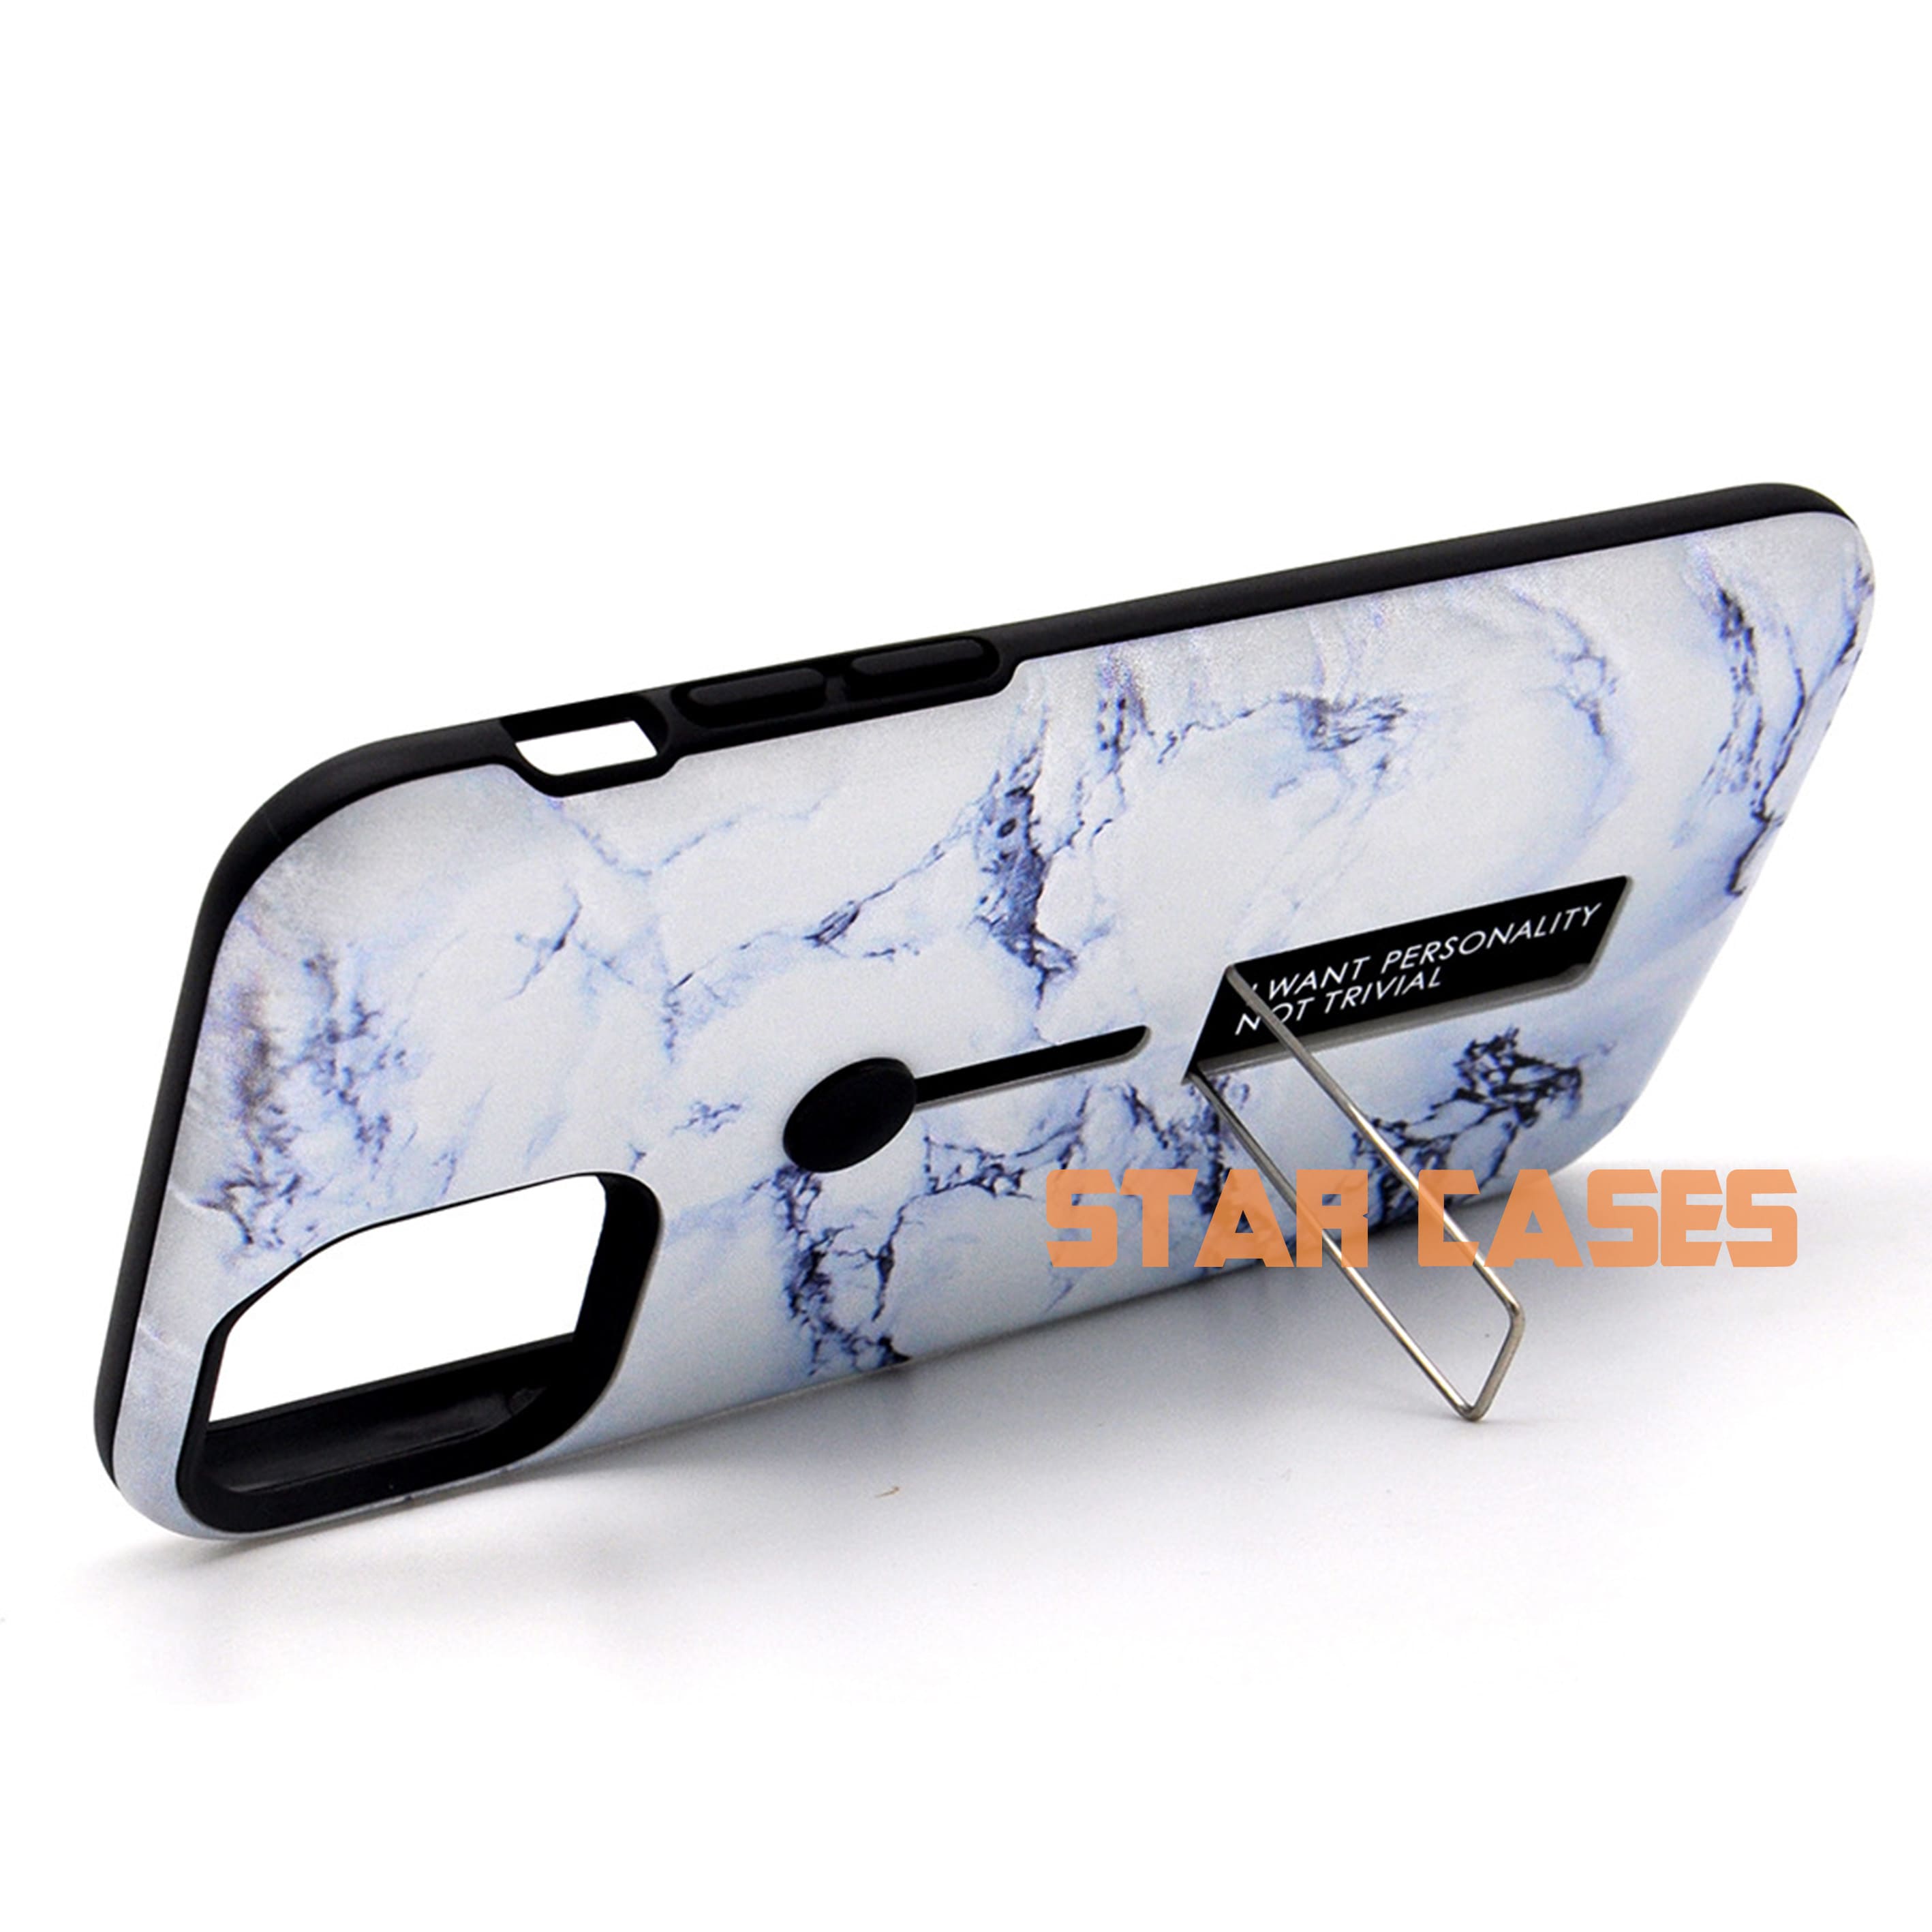 iPhone 11 Pro Marble Shockproof Holder Case